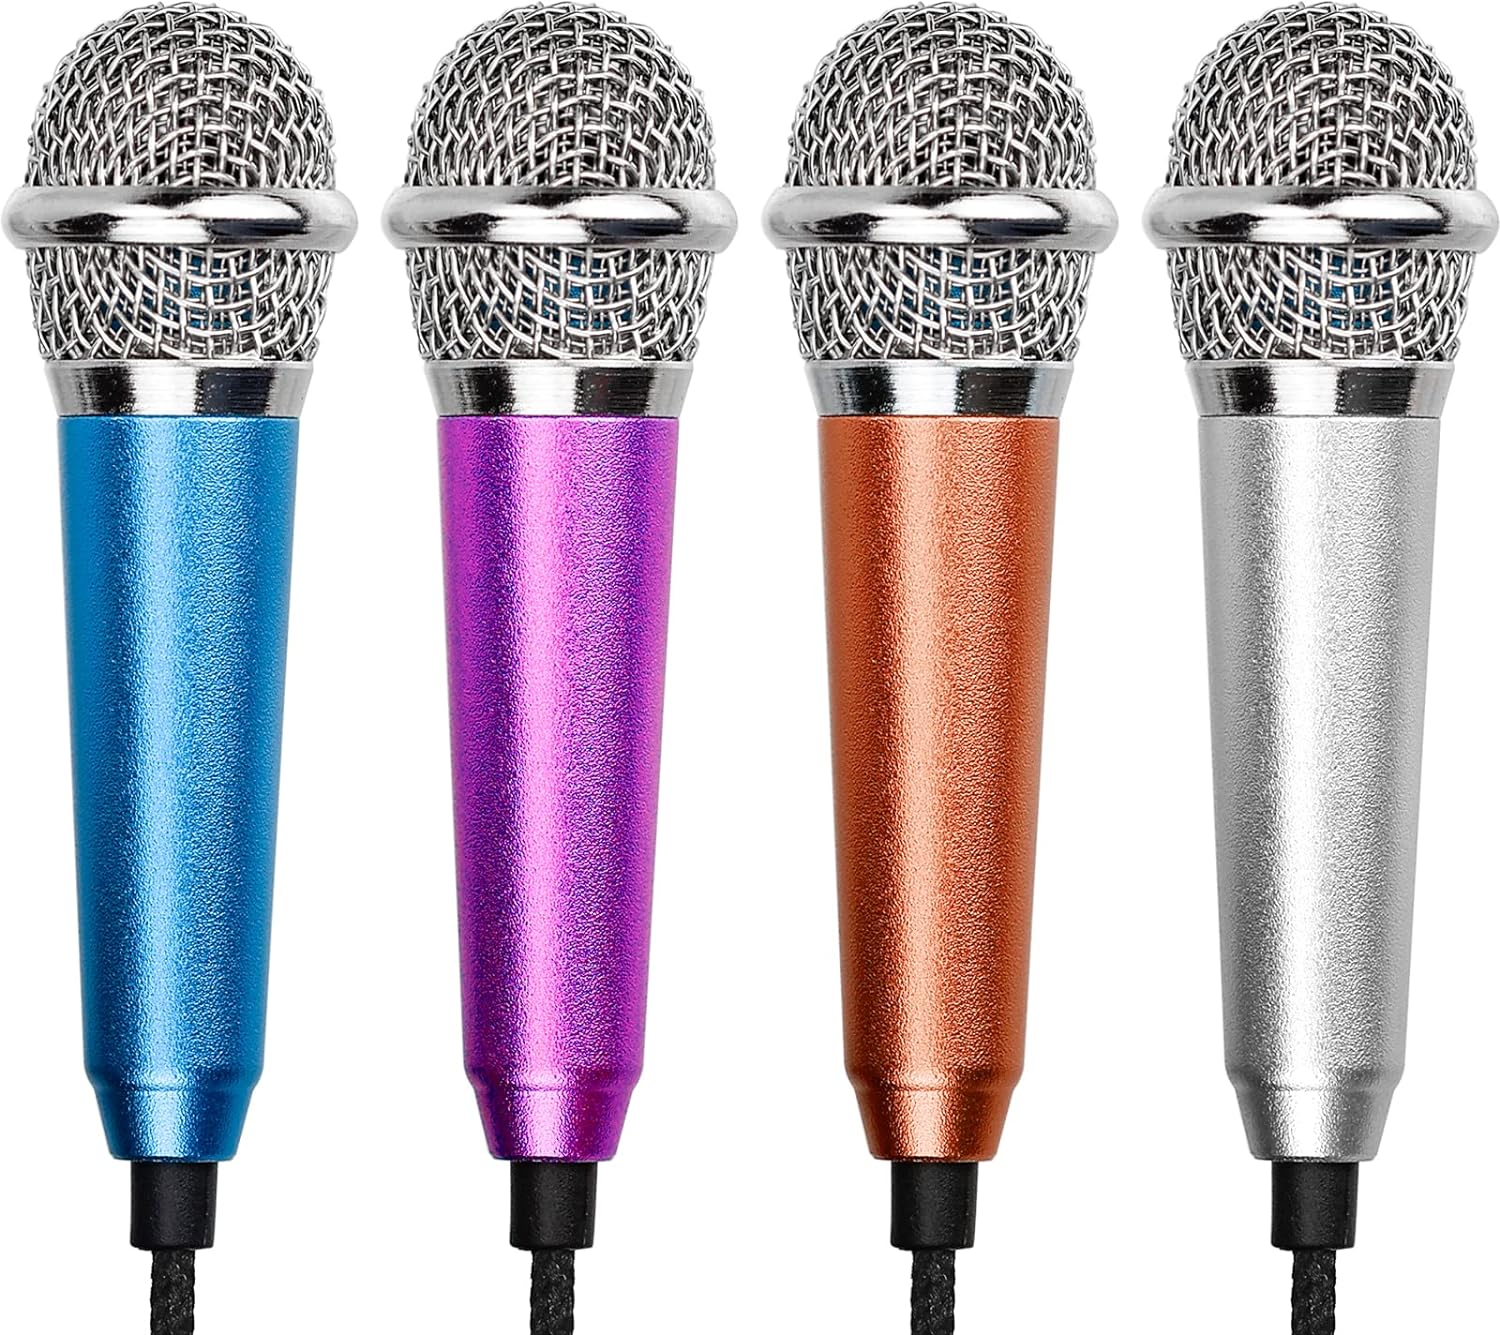 4 PCS Mini Microphone Portable Vocal Microphone မိုဘိုင်းဖုန်း Laptop Notebook အတွက် Mini Karaoke Microphone (အရောင် 4 မျိုး)